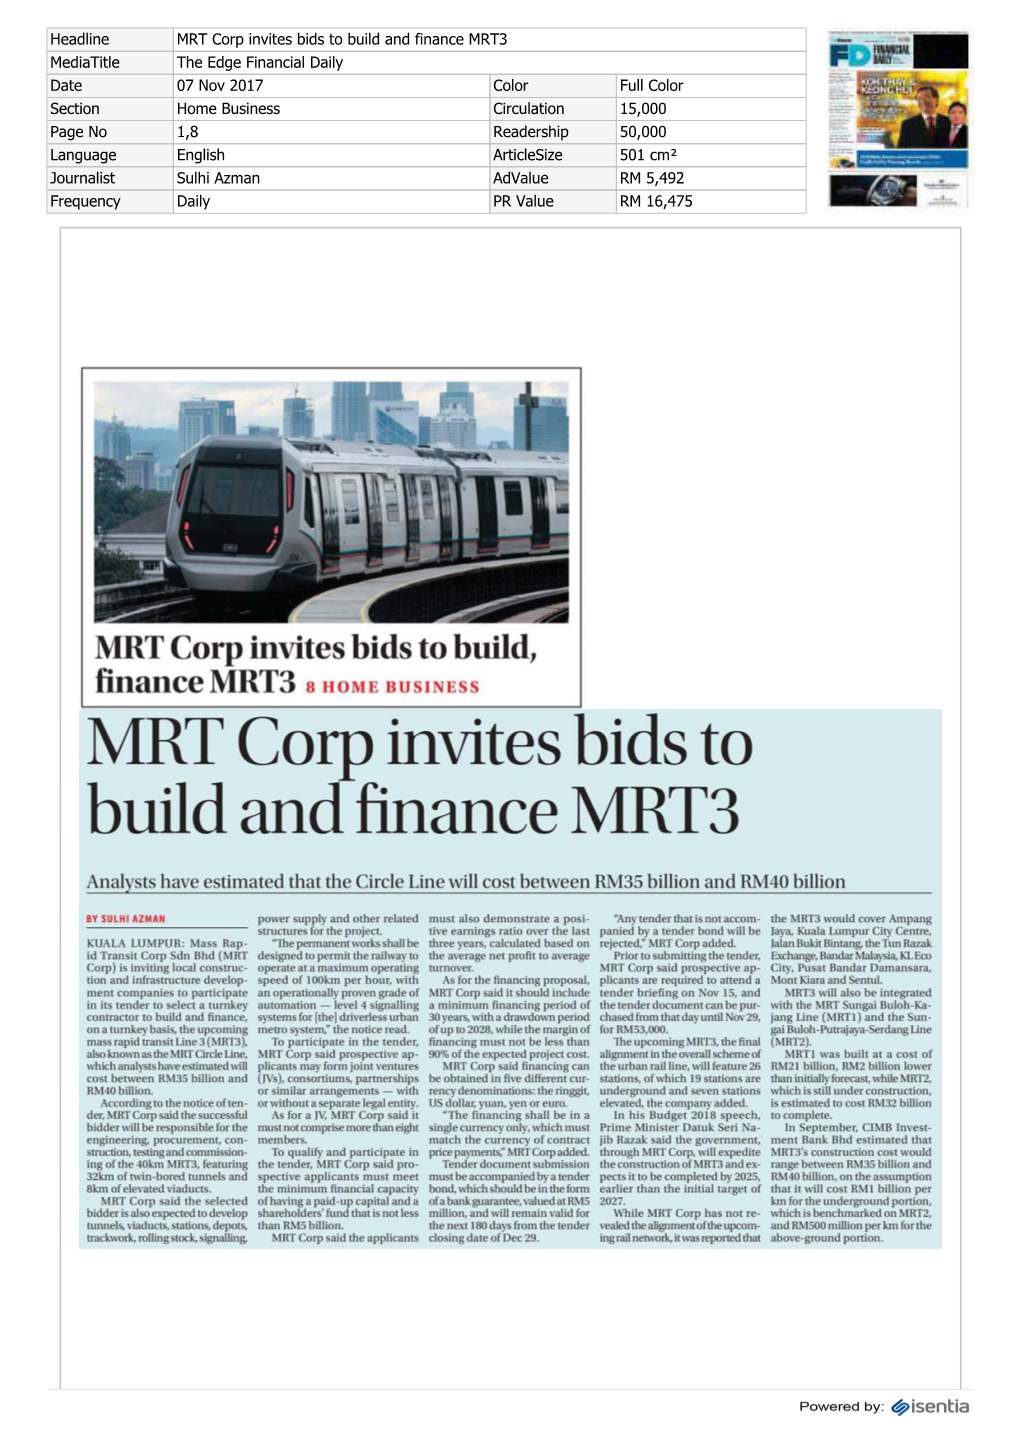 MRT Corp Invites Bids to Build and Finance MRT3